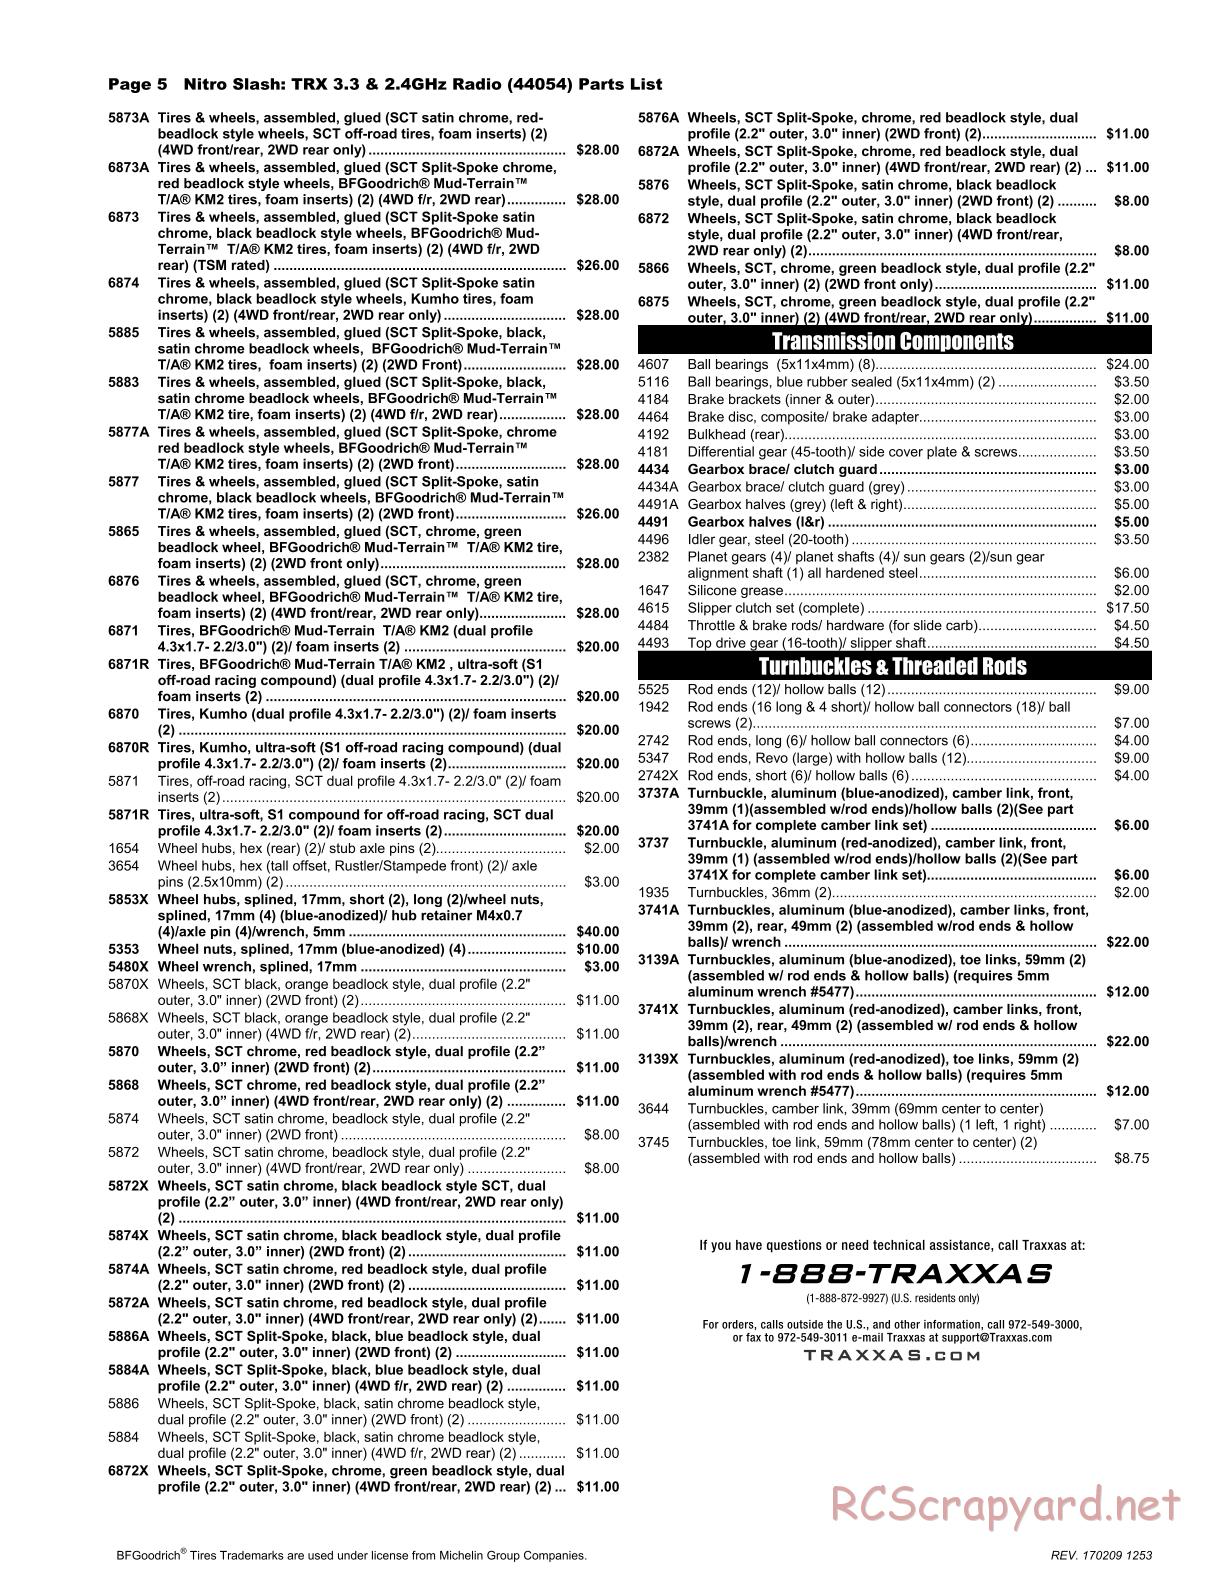 Traxxas - Nitro Slash (2012) - Parts List - Page 5